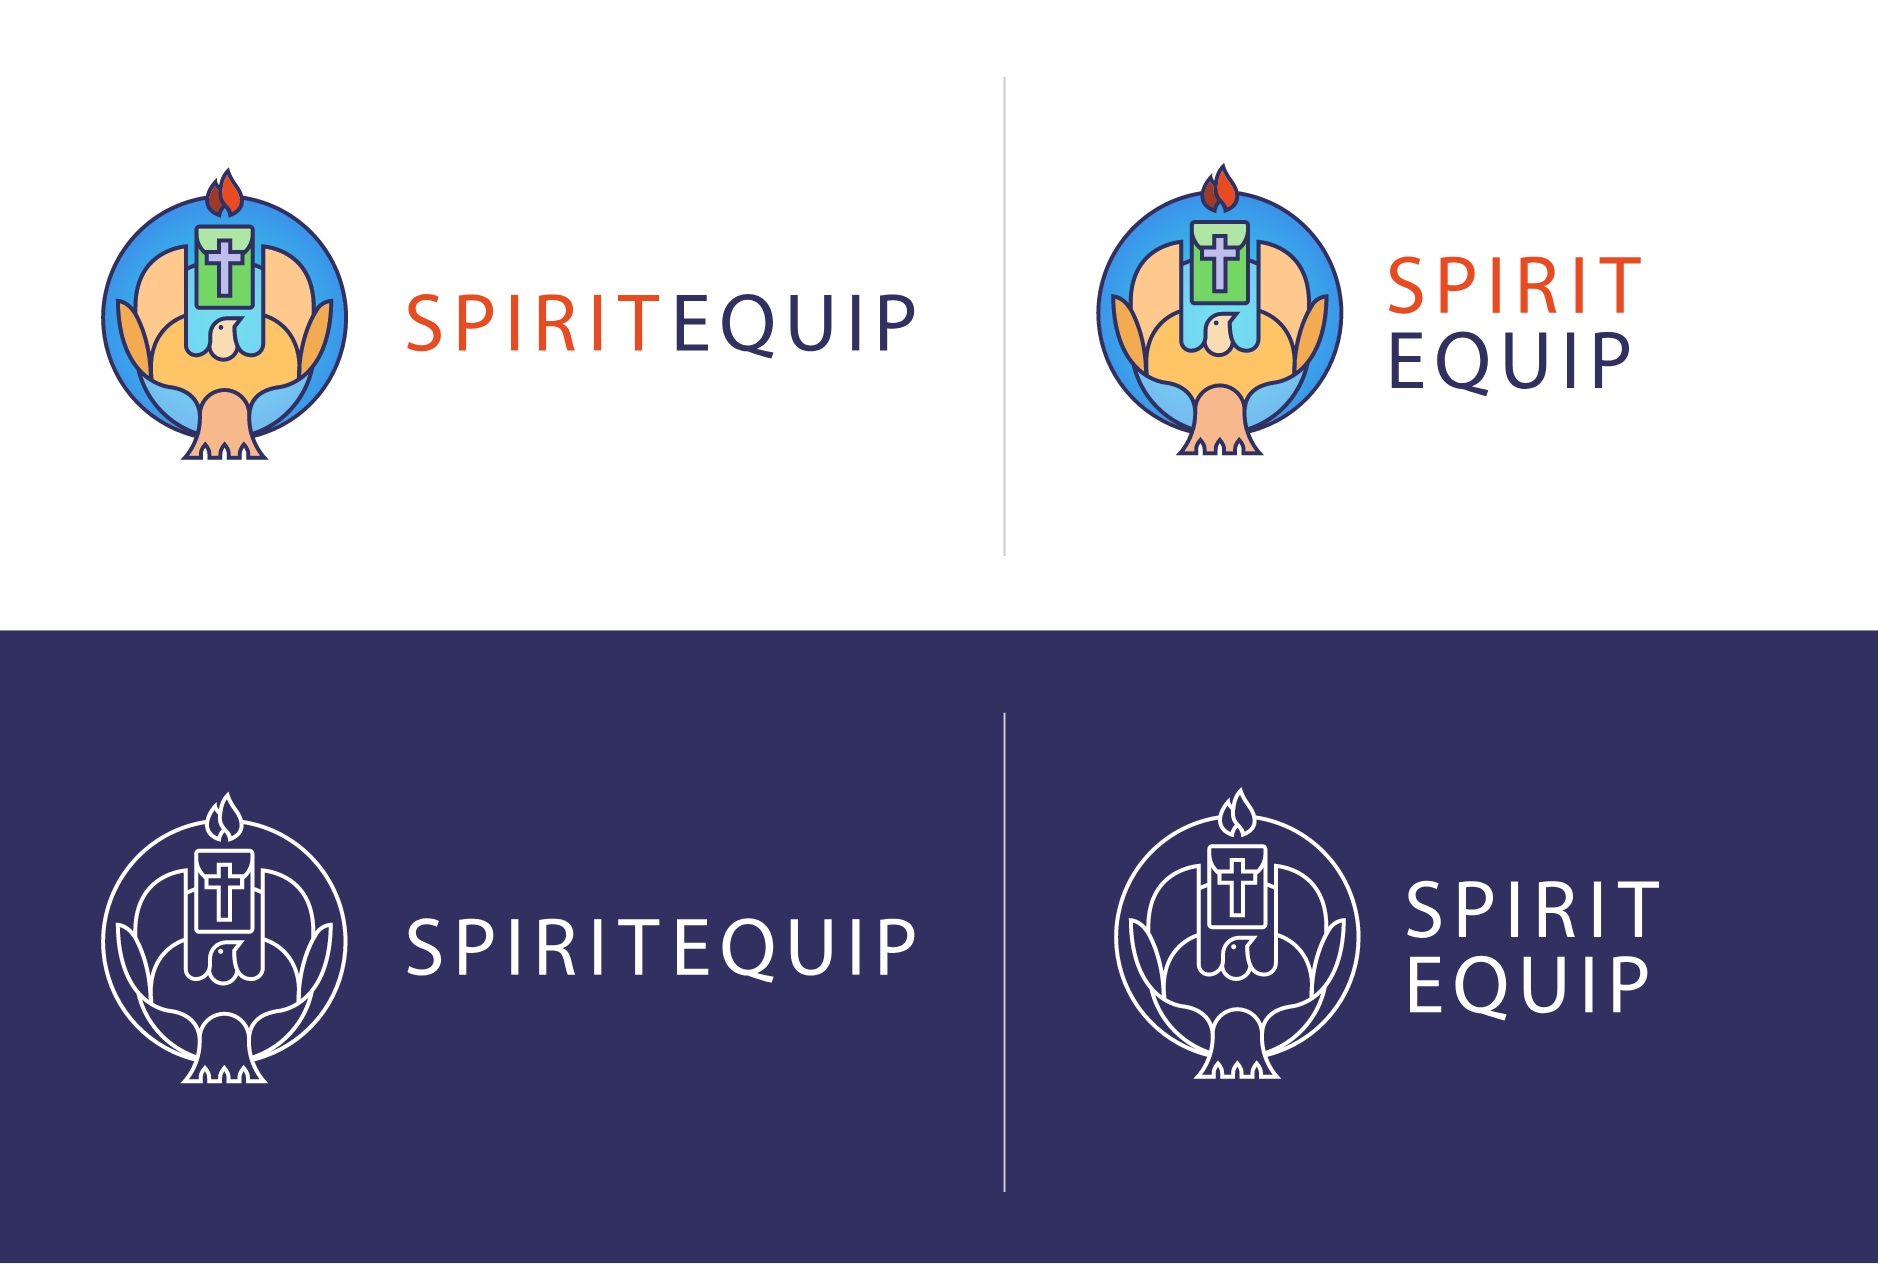 Spirit Equip logo variations